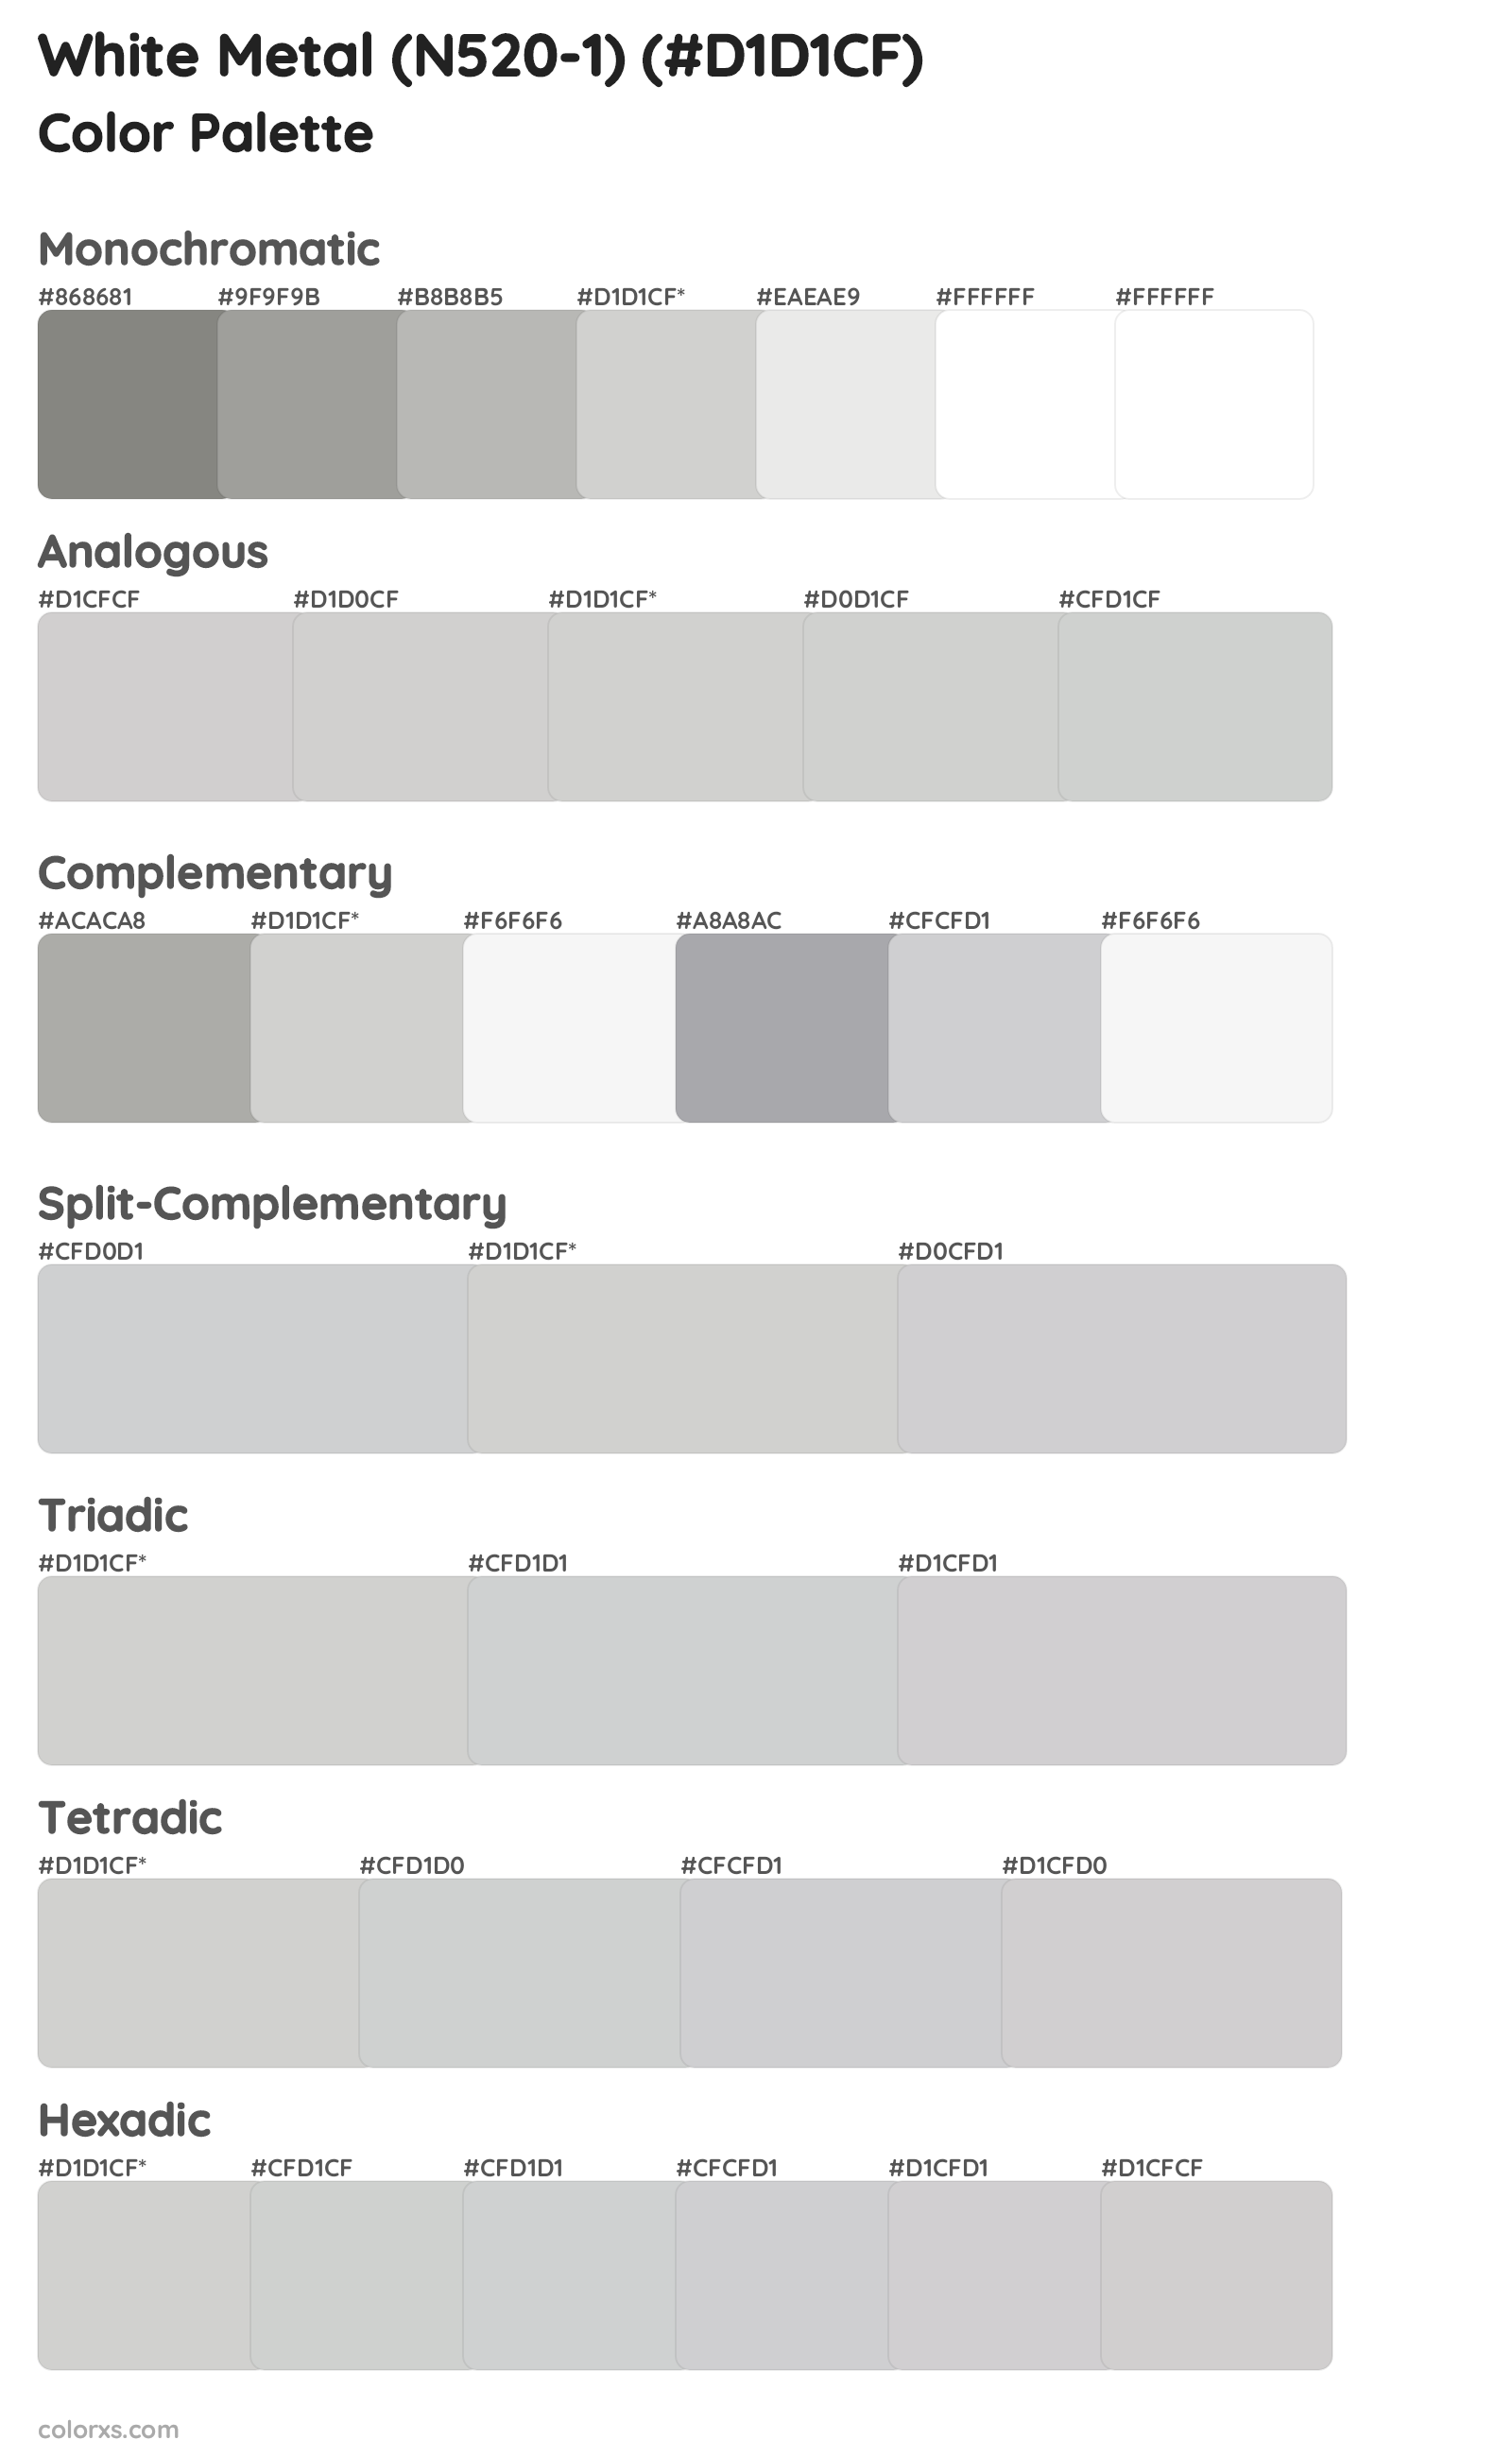 White Metal (N520-1) Color Scheme Palettes